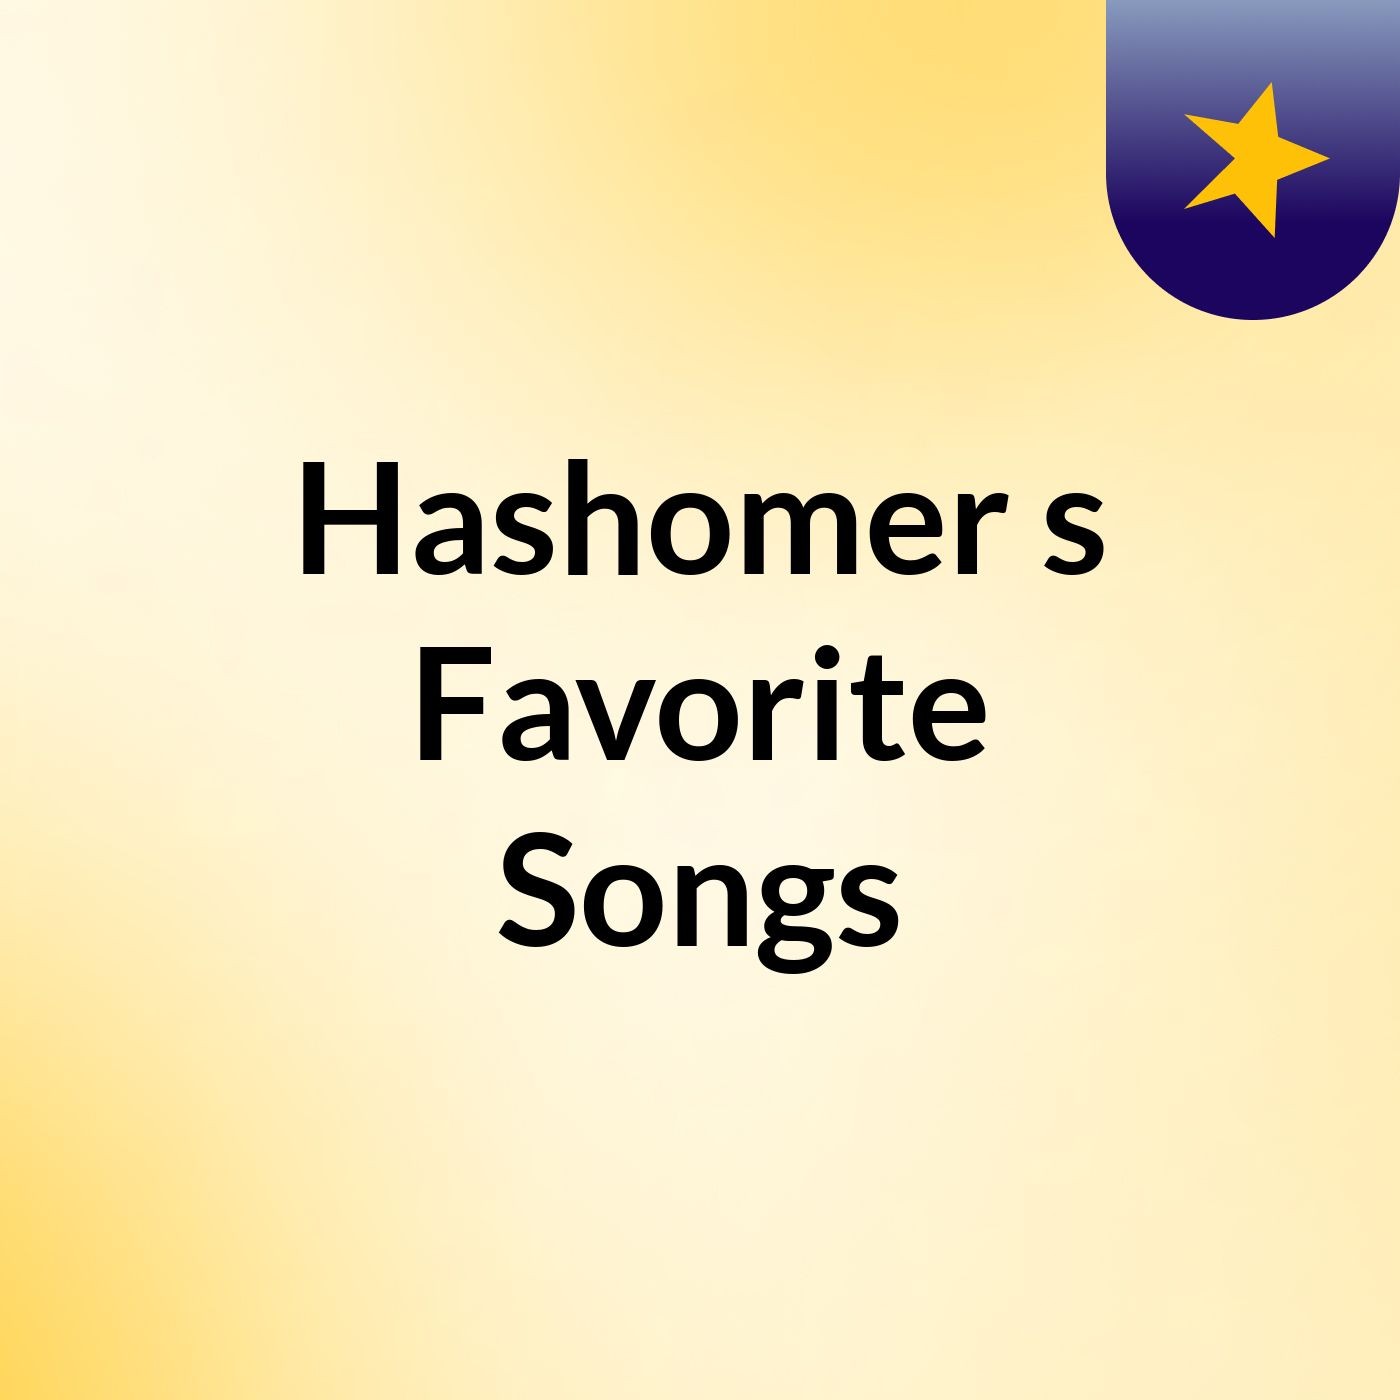 Hashomer's Favorite Songs